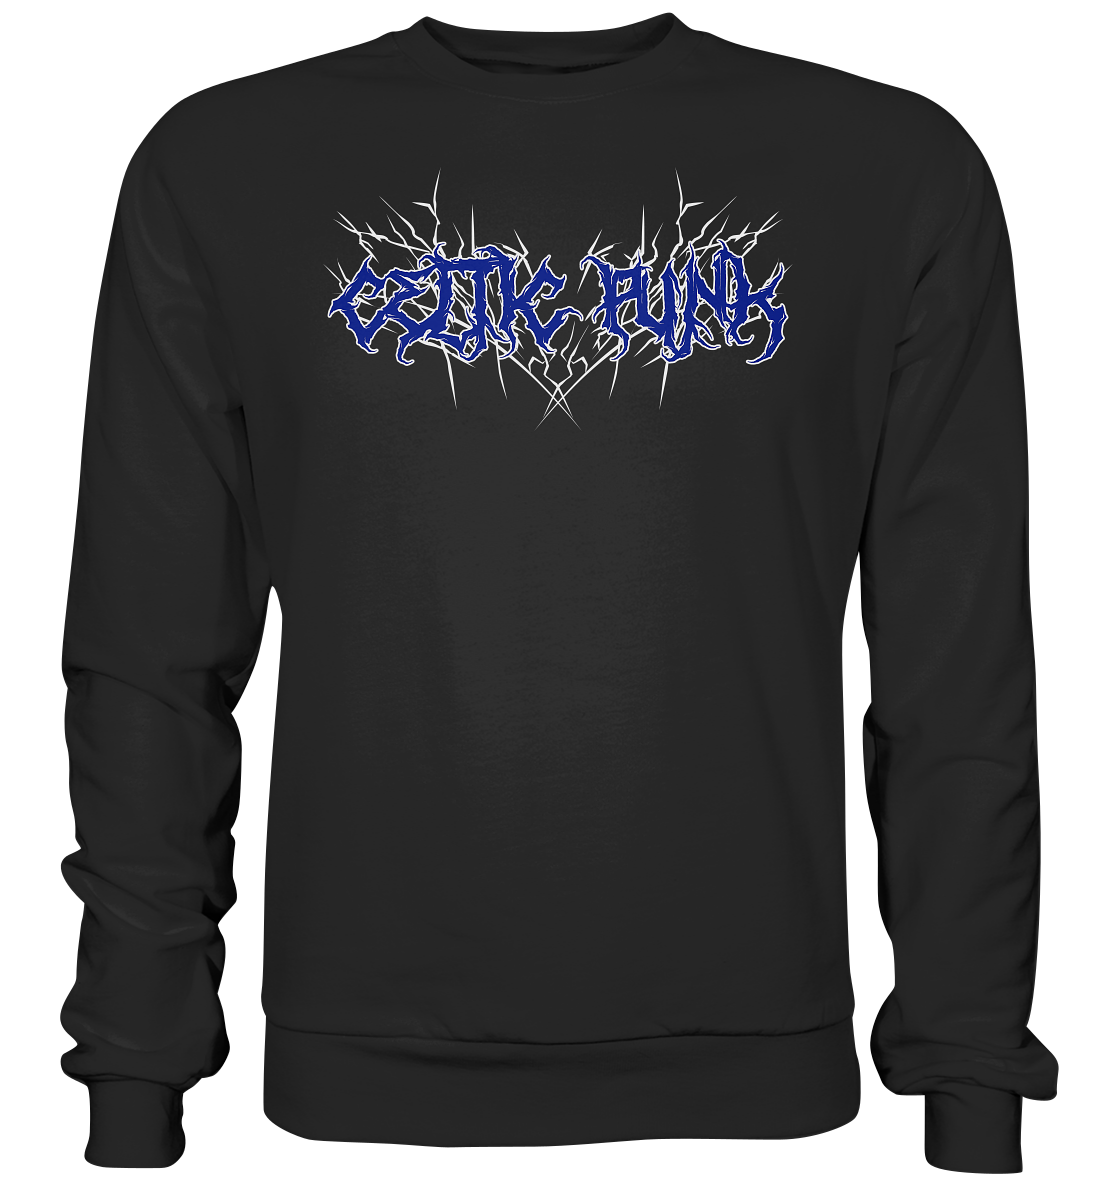 Celtic Punk "Metal Band" - Basic Sweatshirt